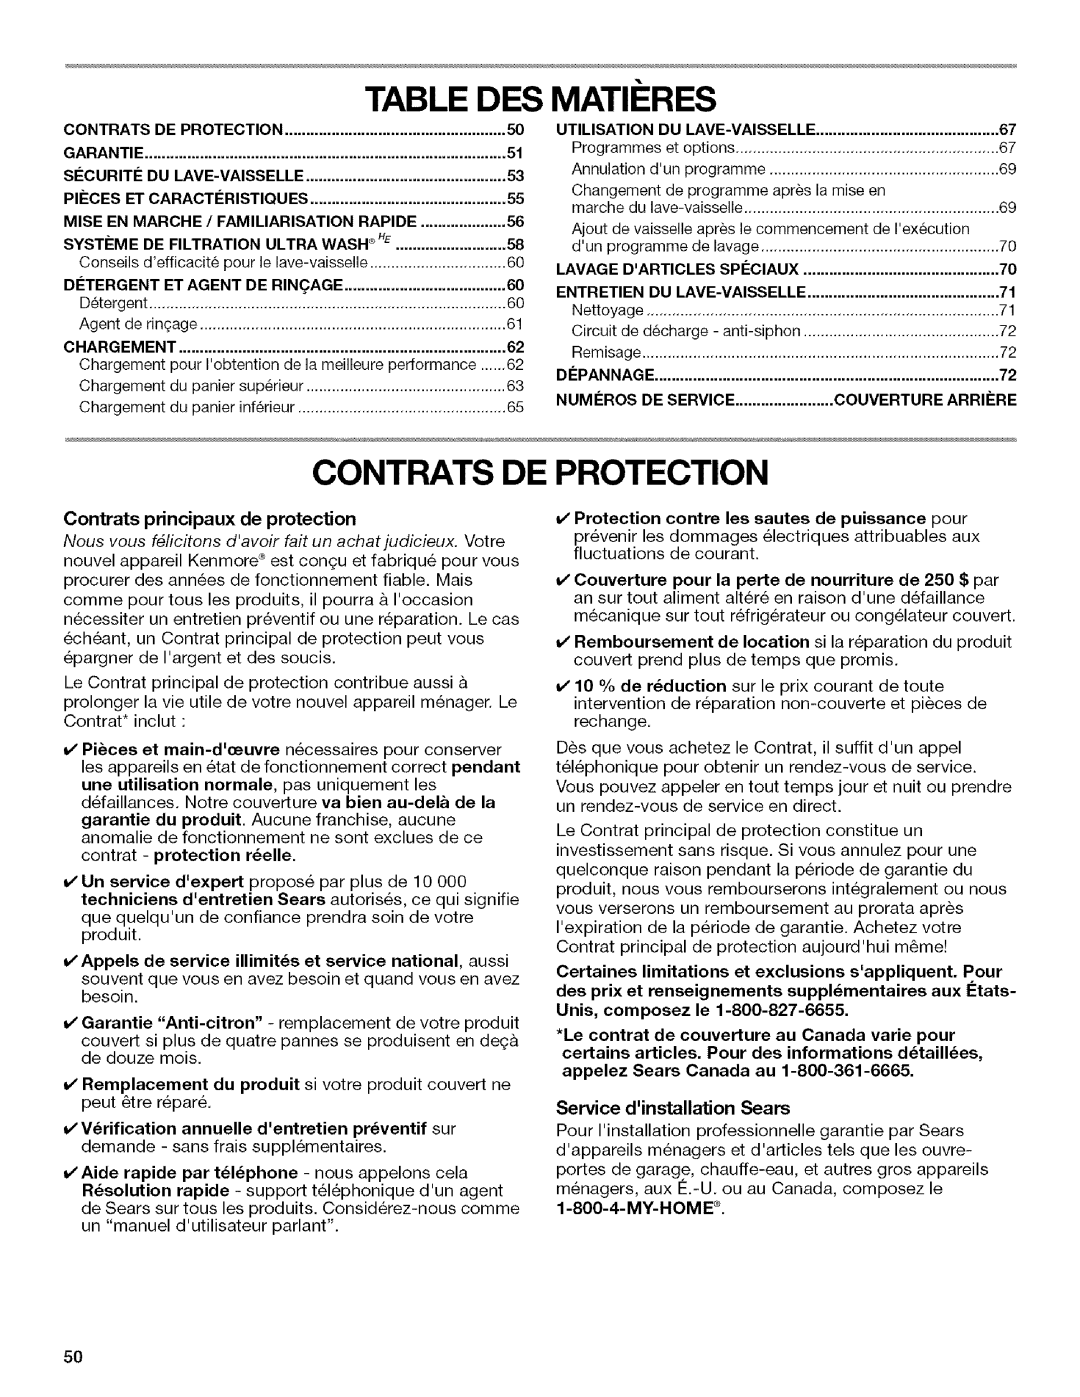 Kenmore 665.1312, 665.1342 manual Table Des Matii Res, Contrats De Protection, Contrats principaux de protection 